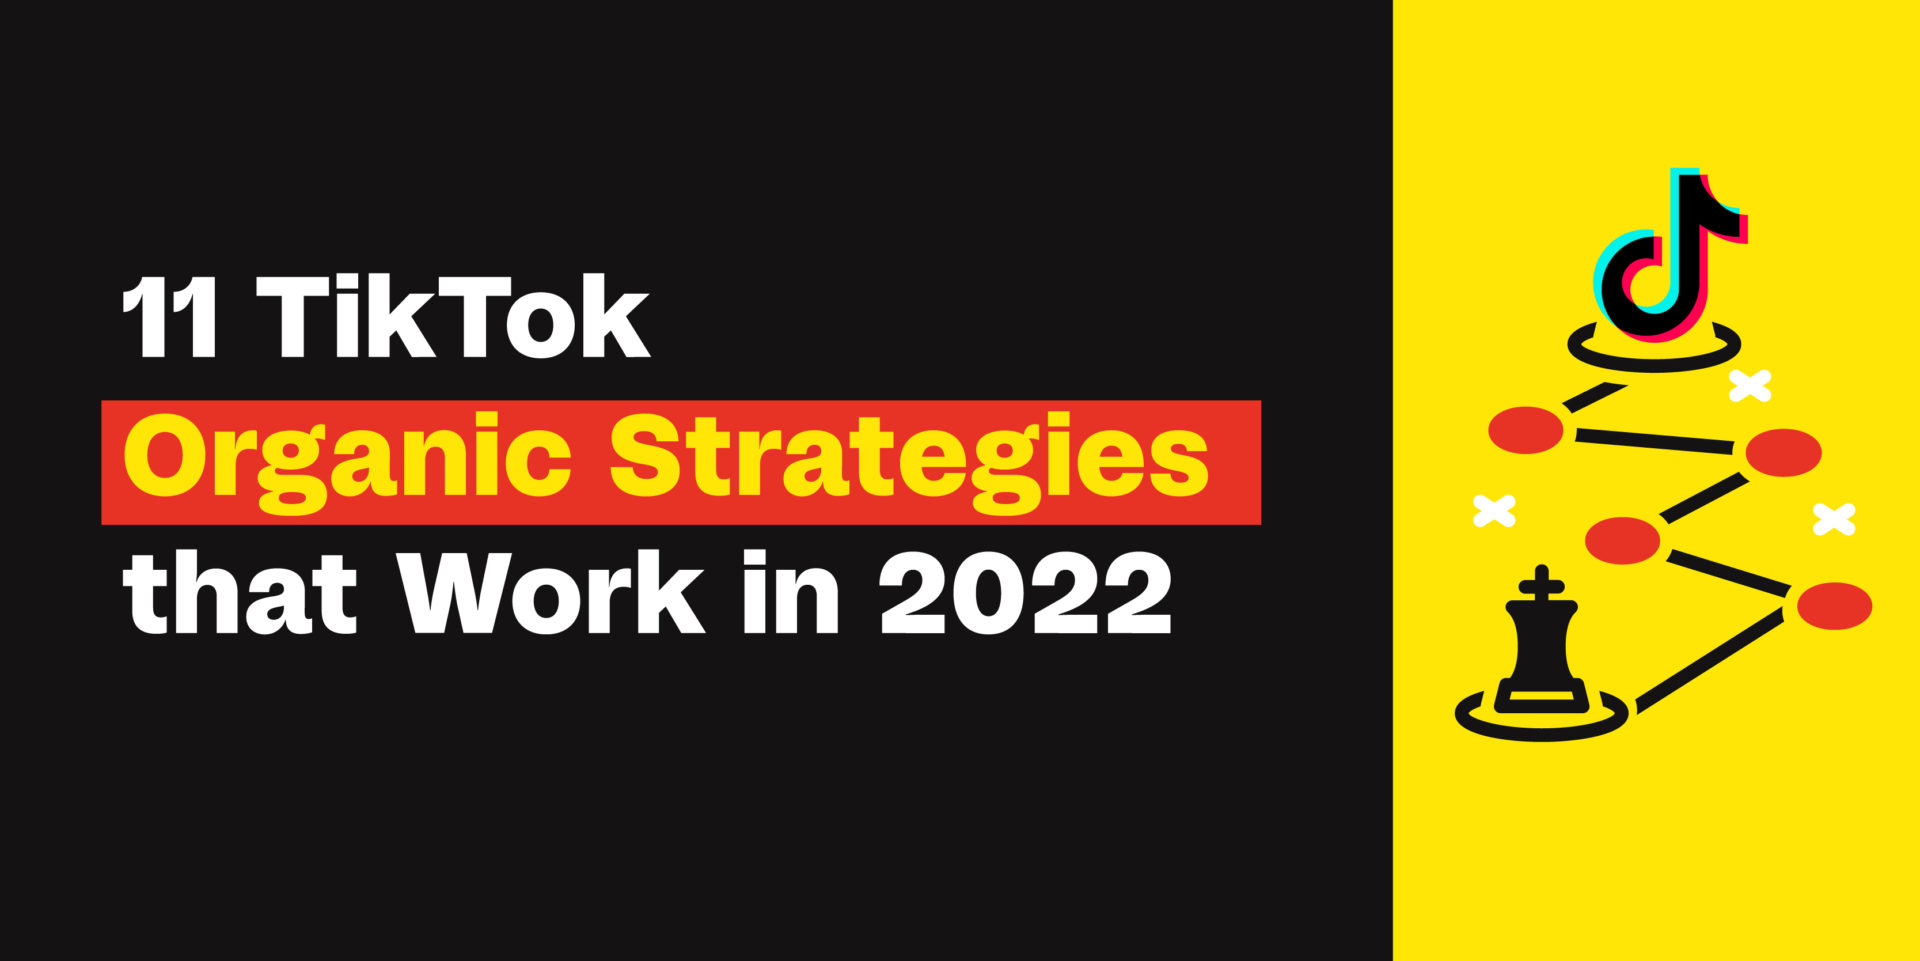 11 TikTok Strategies that Work in 2022